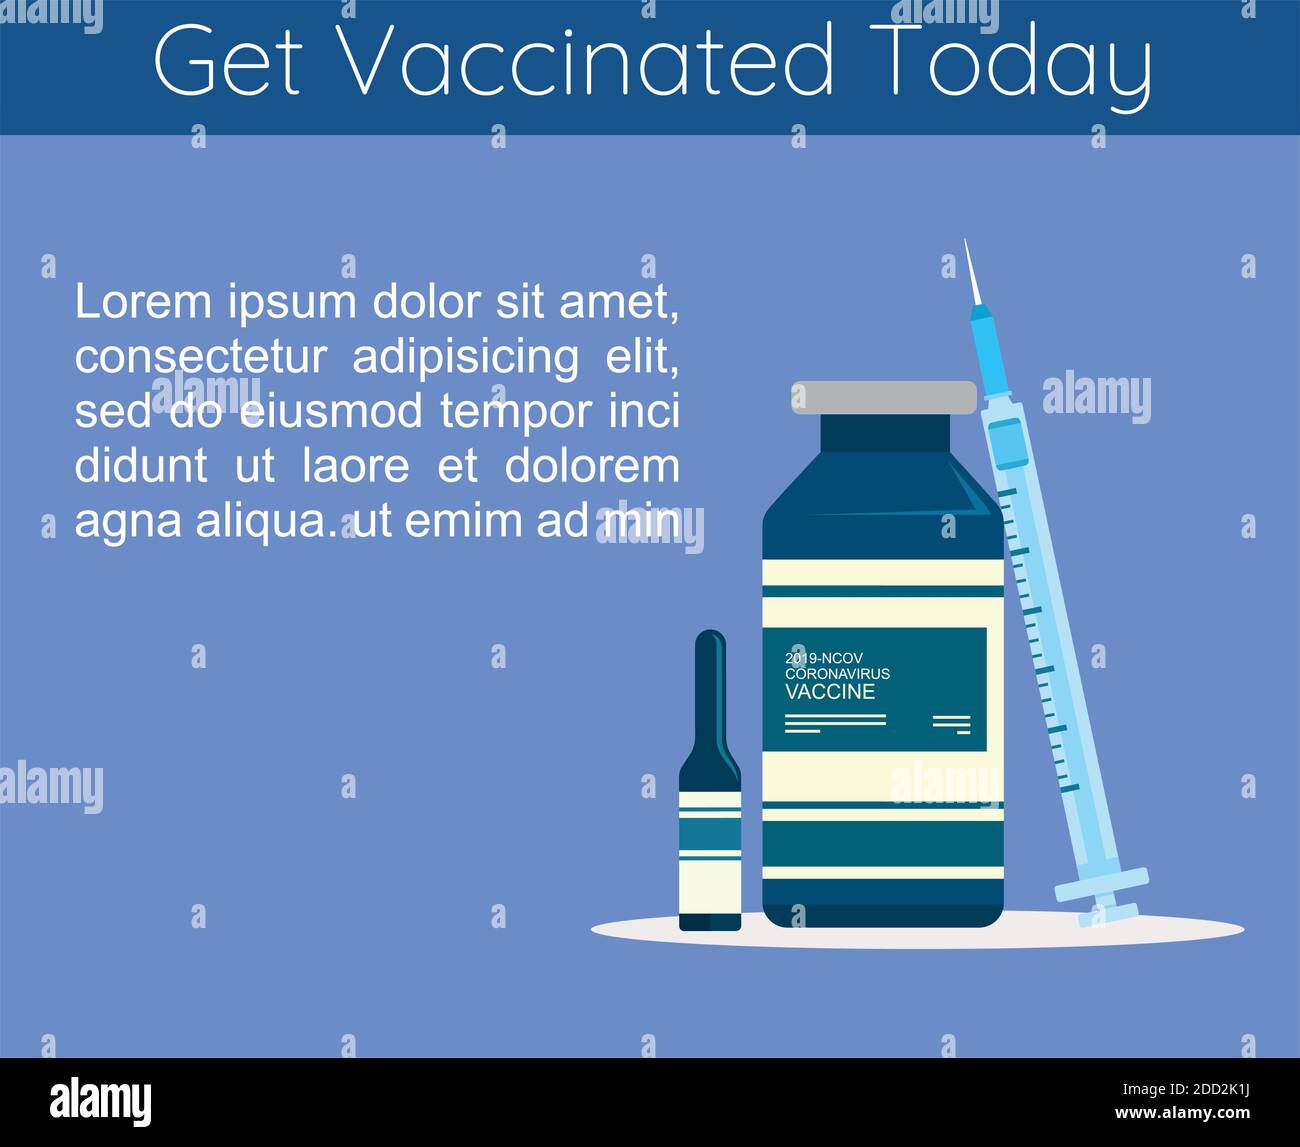 Lassen Sie Sich Heute Impfen. Corona Virus, Covid-19 Impfbewusstsein Konzept. Flache Illustration. Stock Vektor